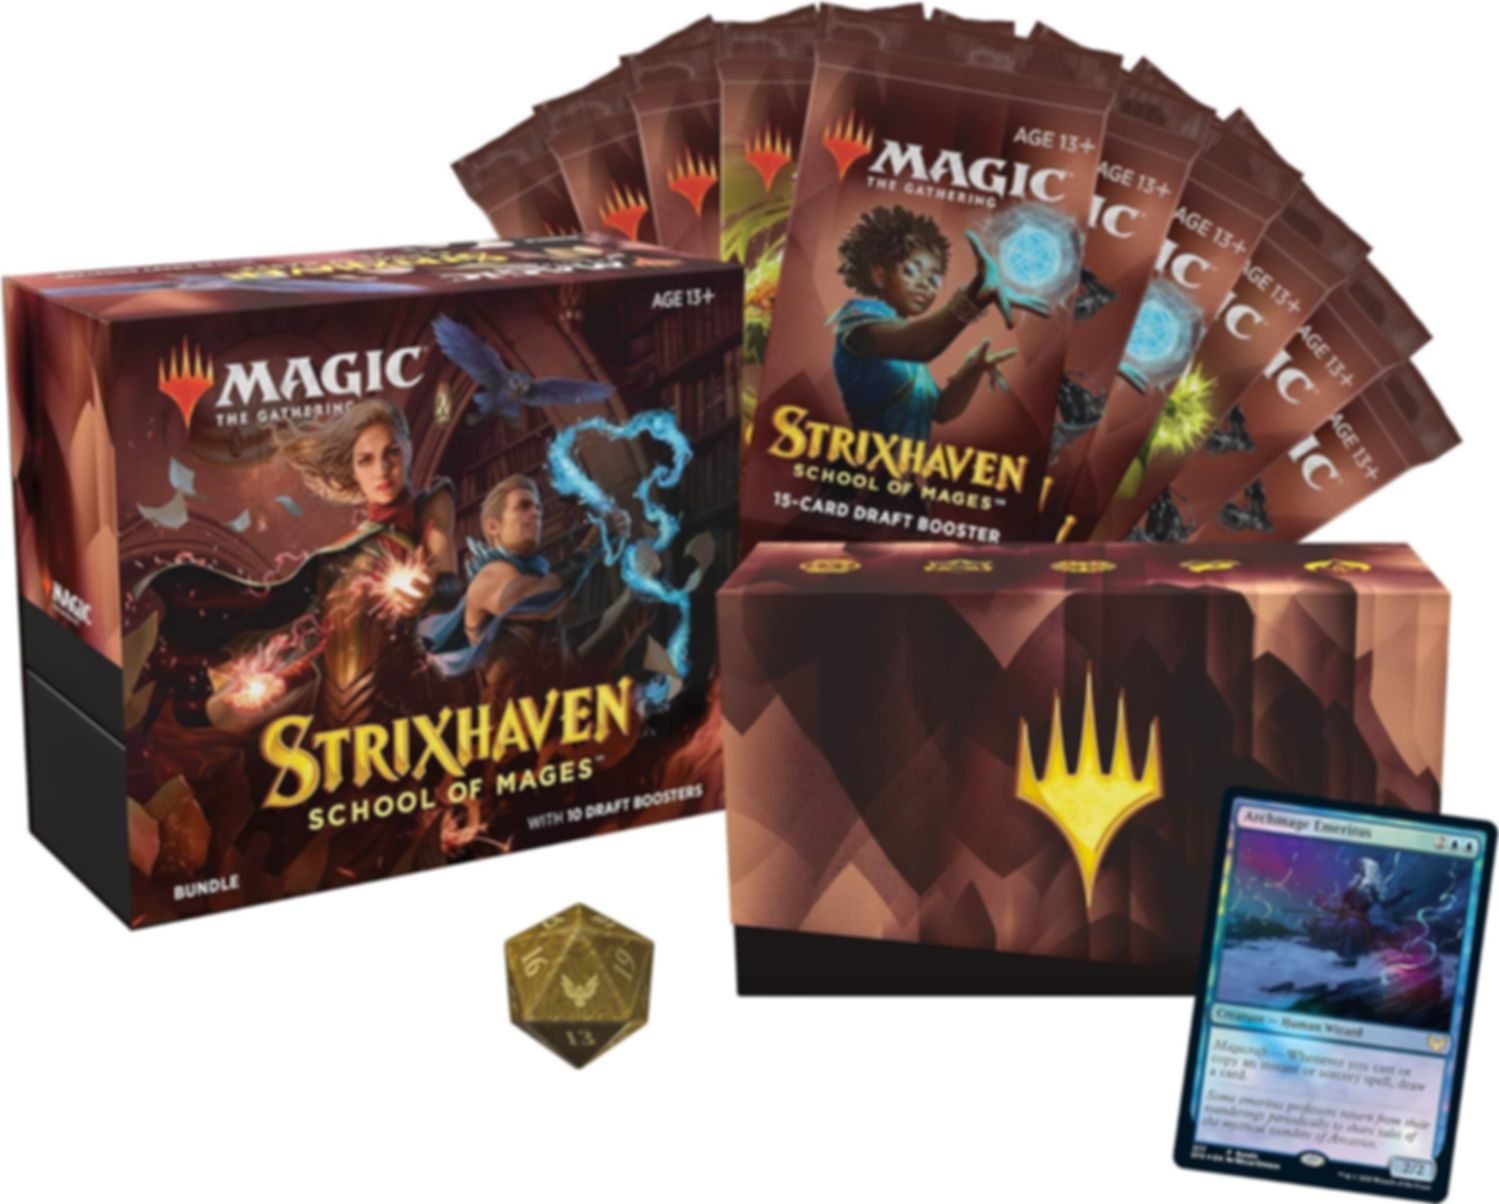 Magic The Gathering Strixhaven Bundle components